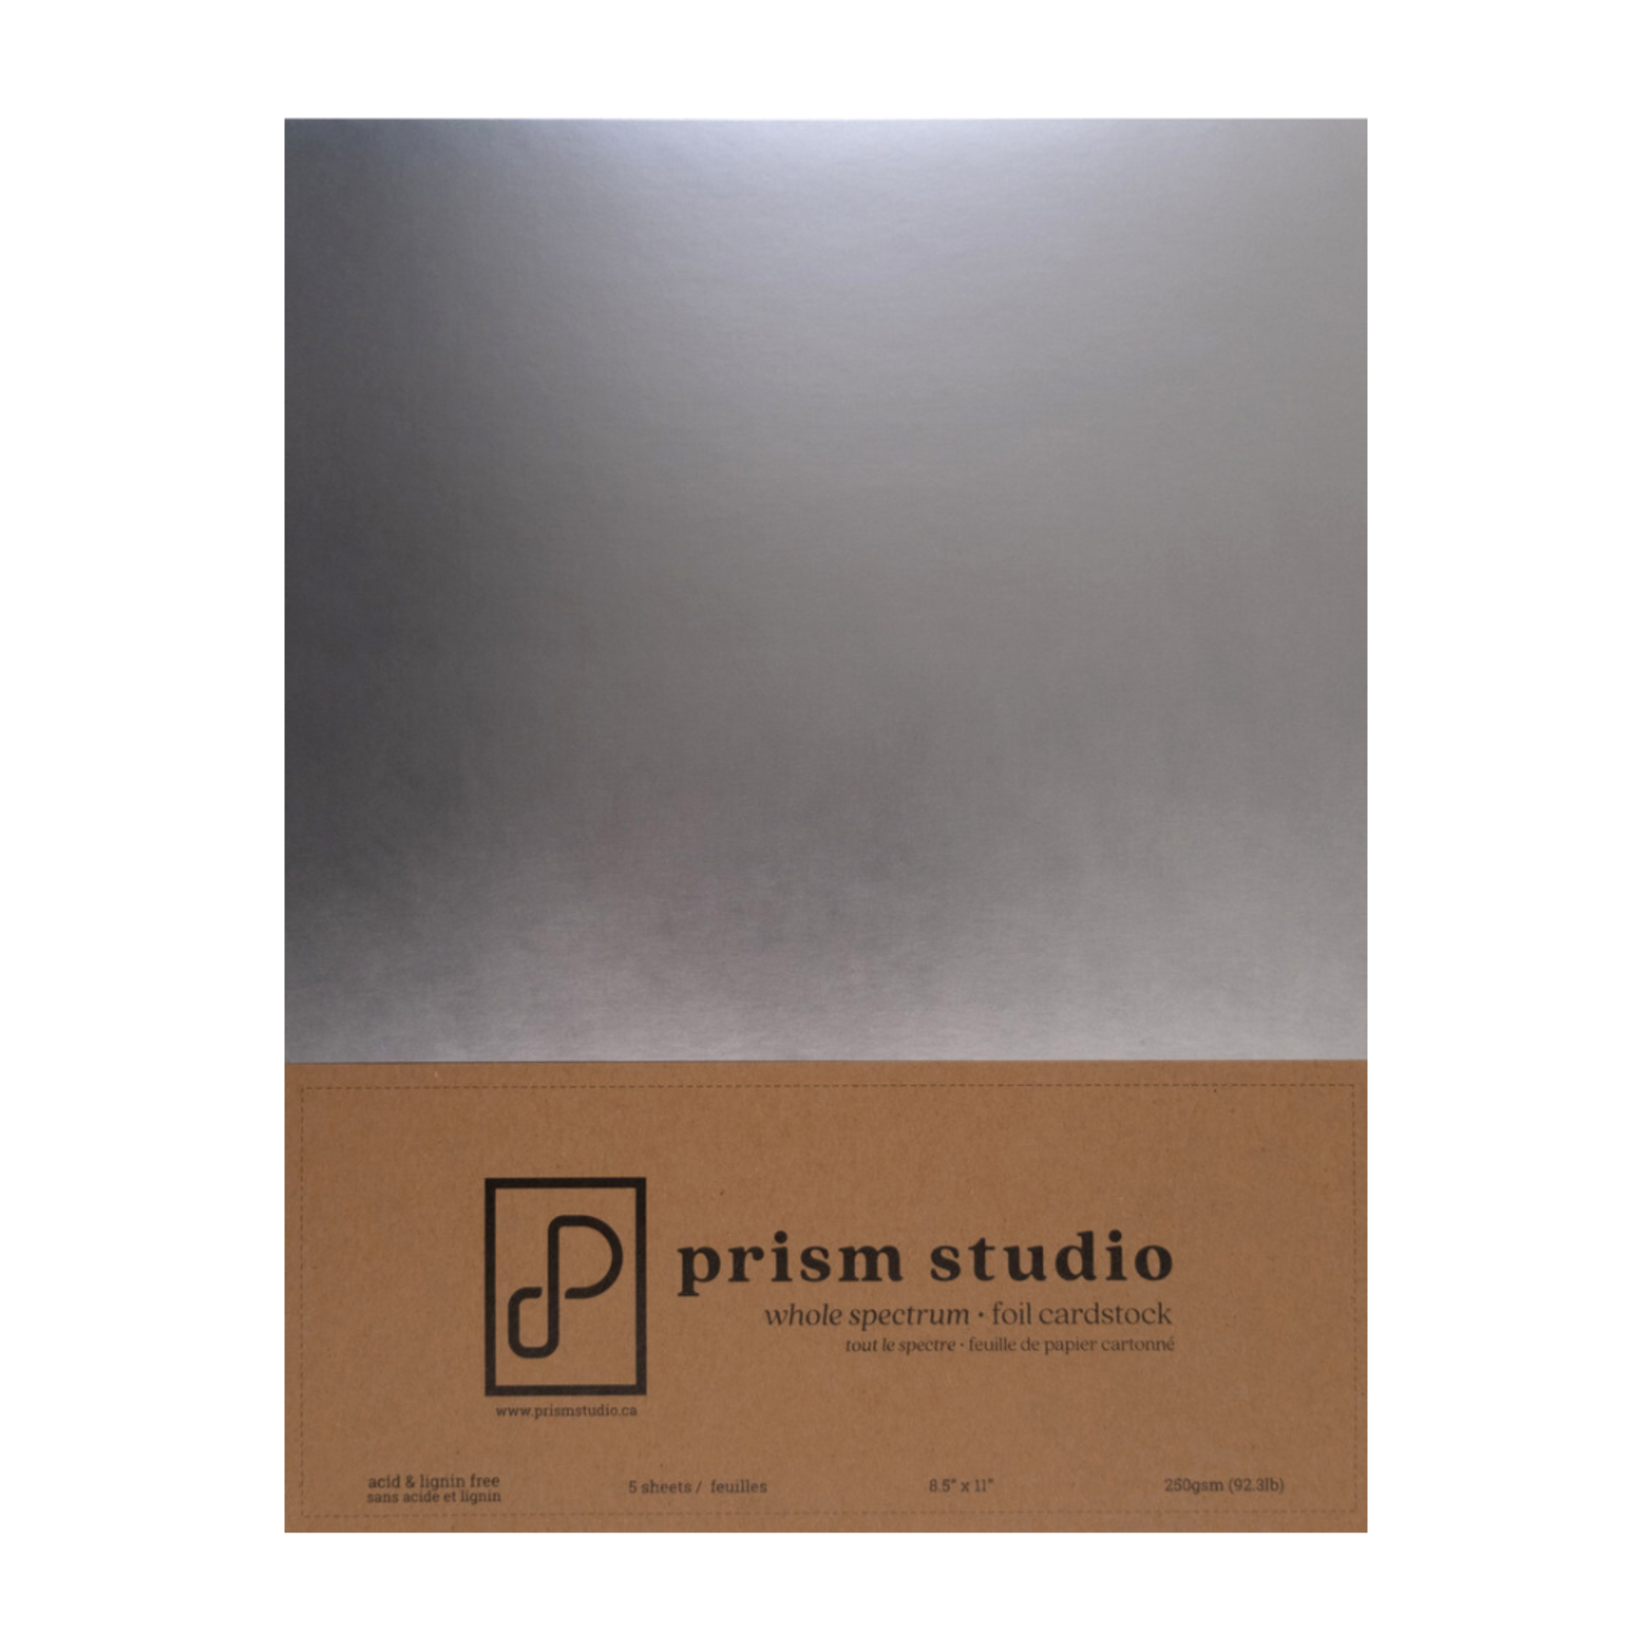 PRISM STUDIO PRISM STUDIO WHOLE SPECTRUM FOIL CARDSTOCK 8.5X11 BRUSHED SILVER